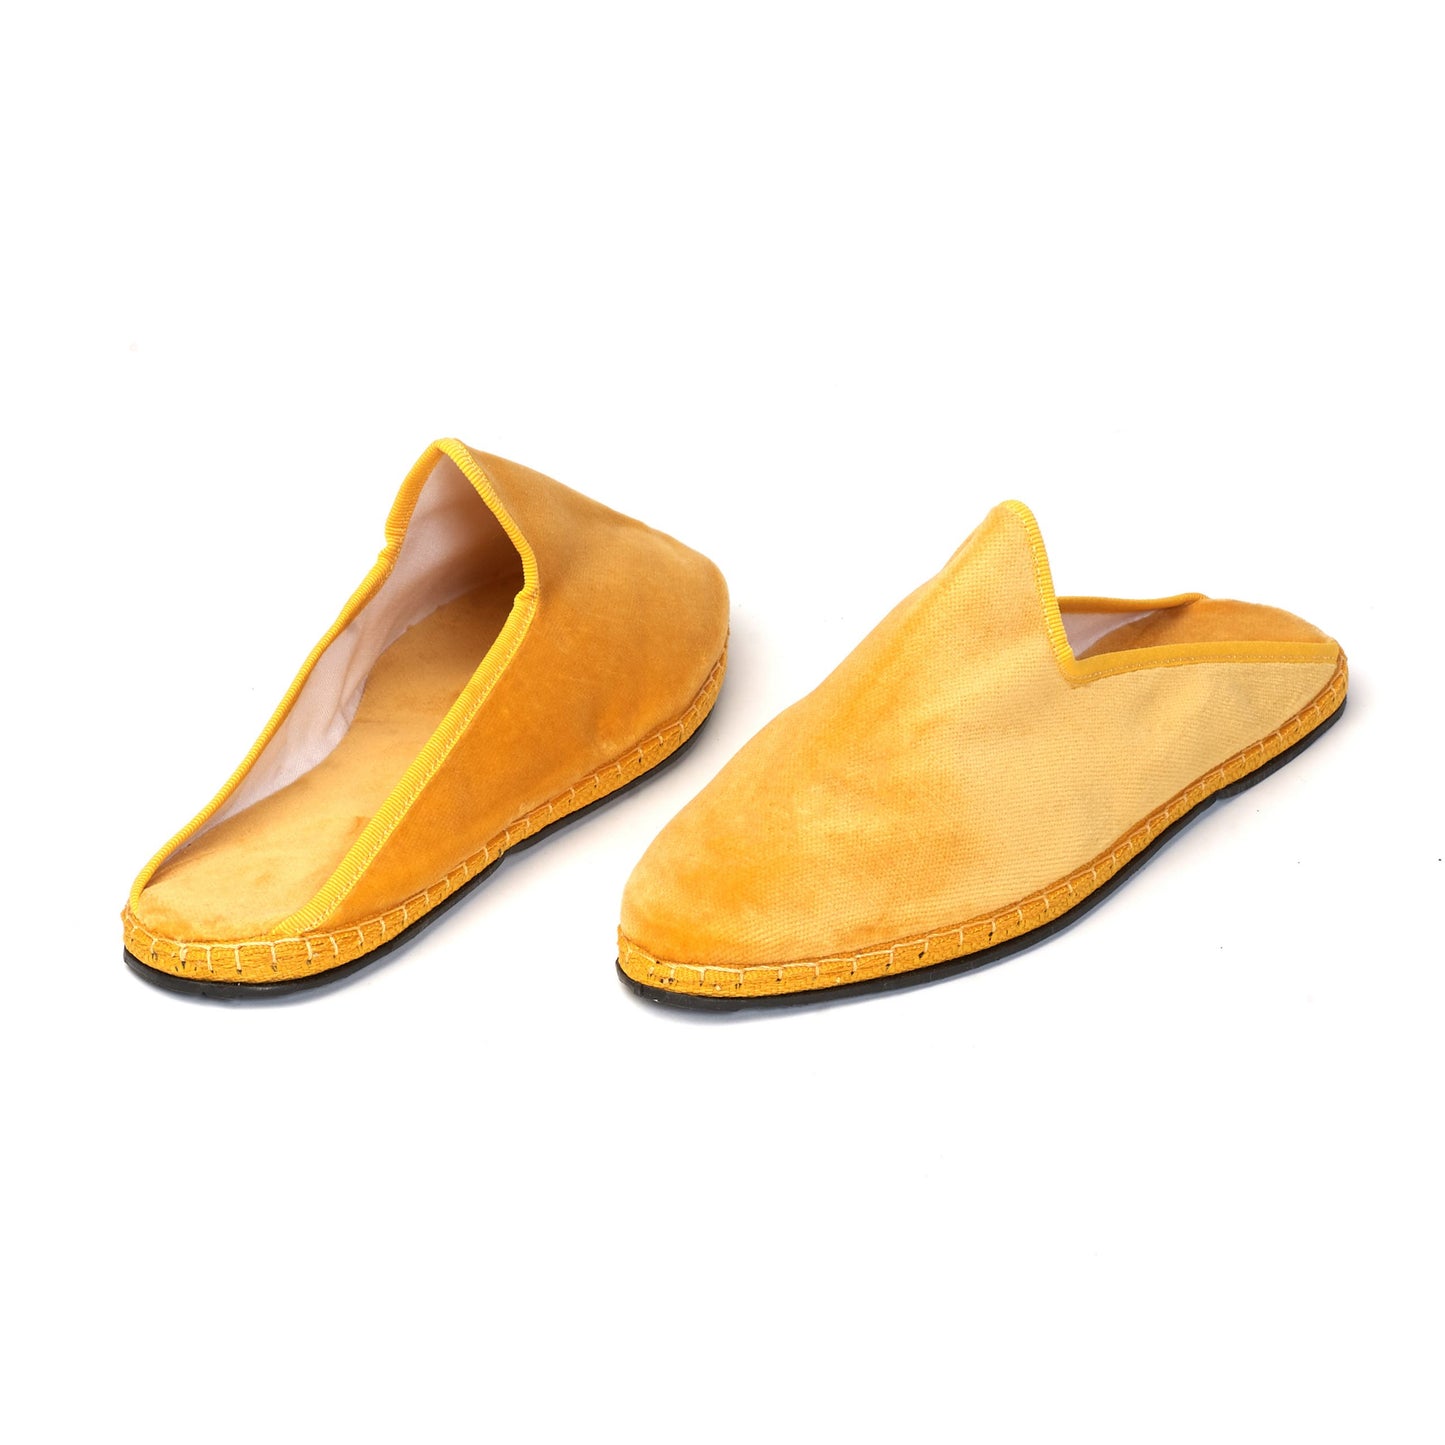 Sunshine slippers